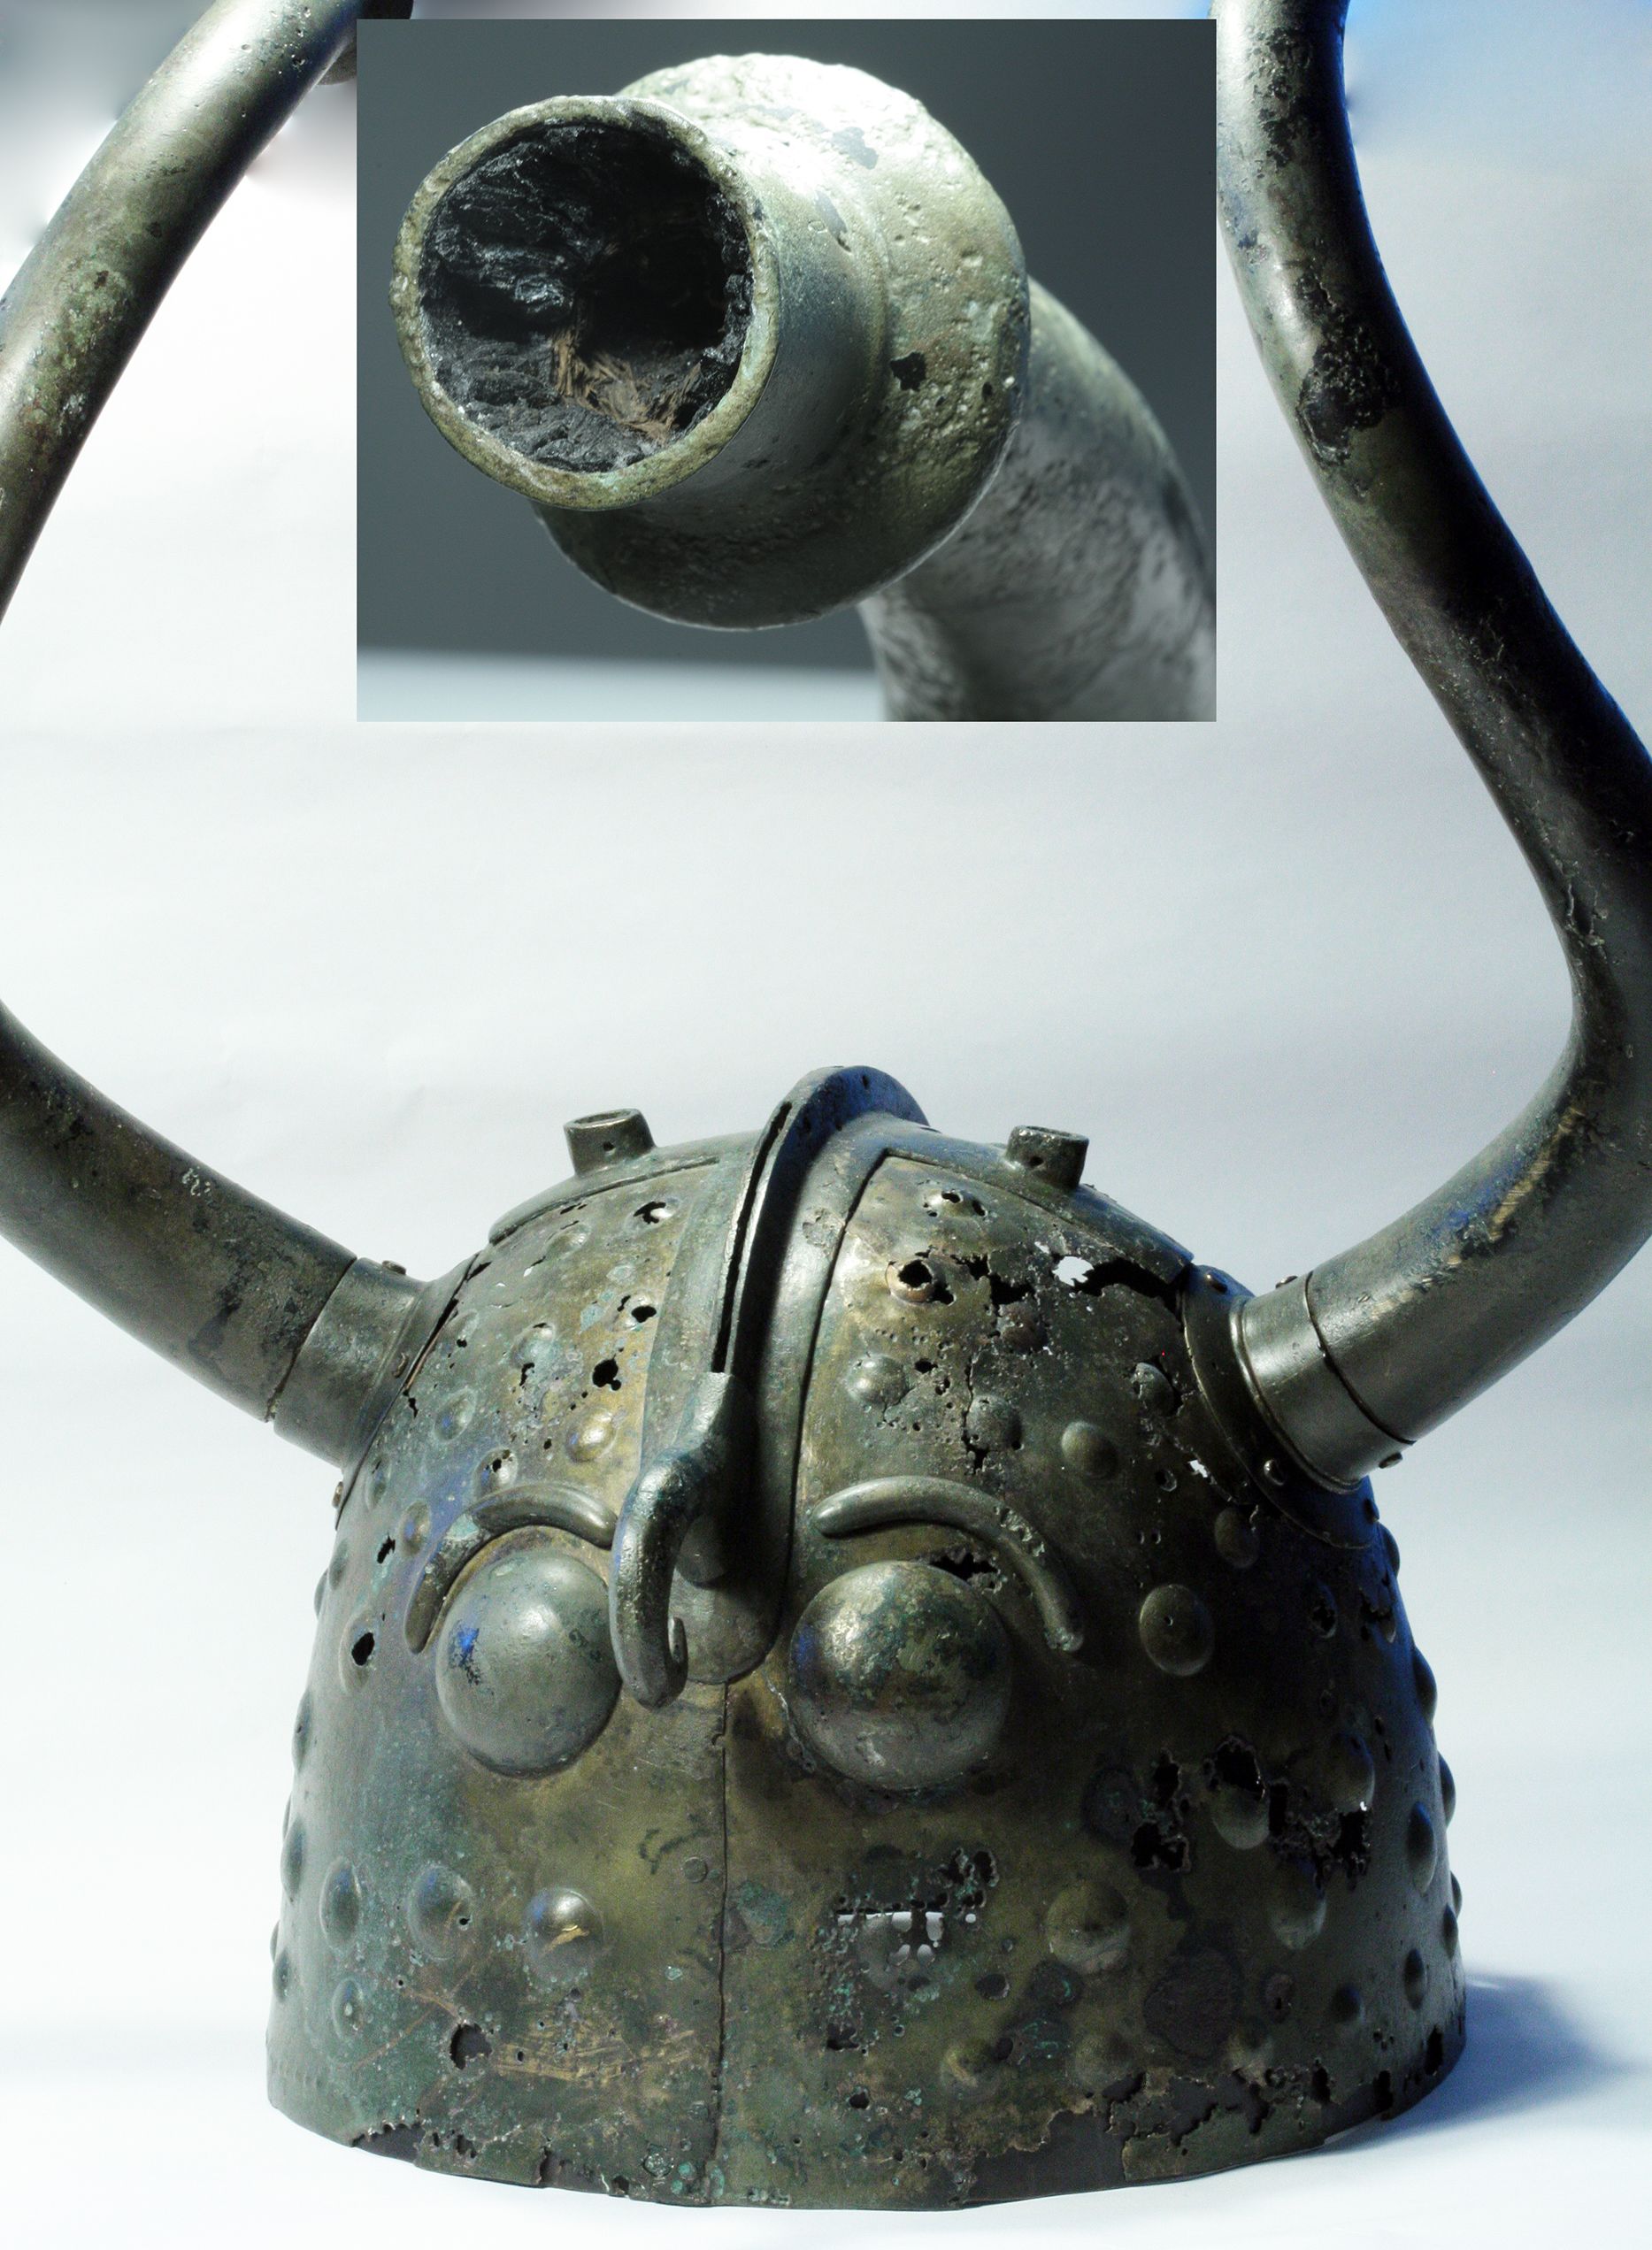 Horned helmets predate Vikings by 3,000 years, originating in the Age, researchers say | CNN